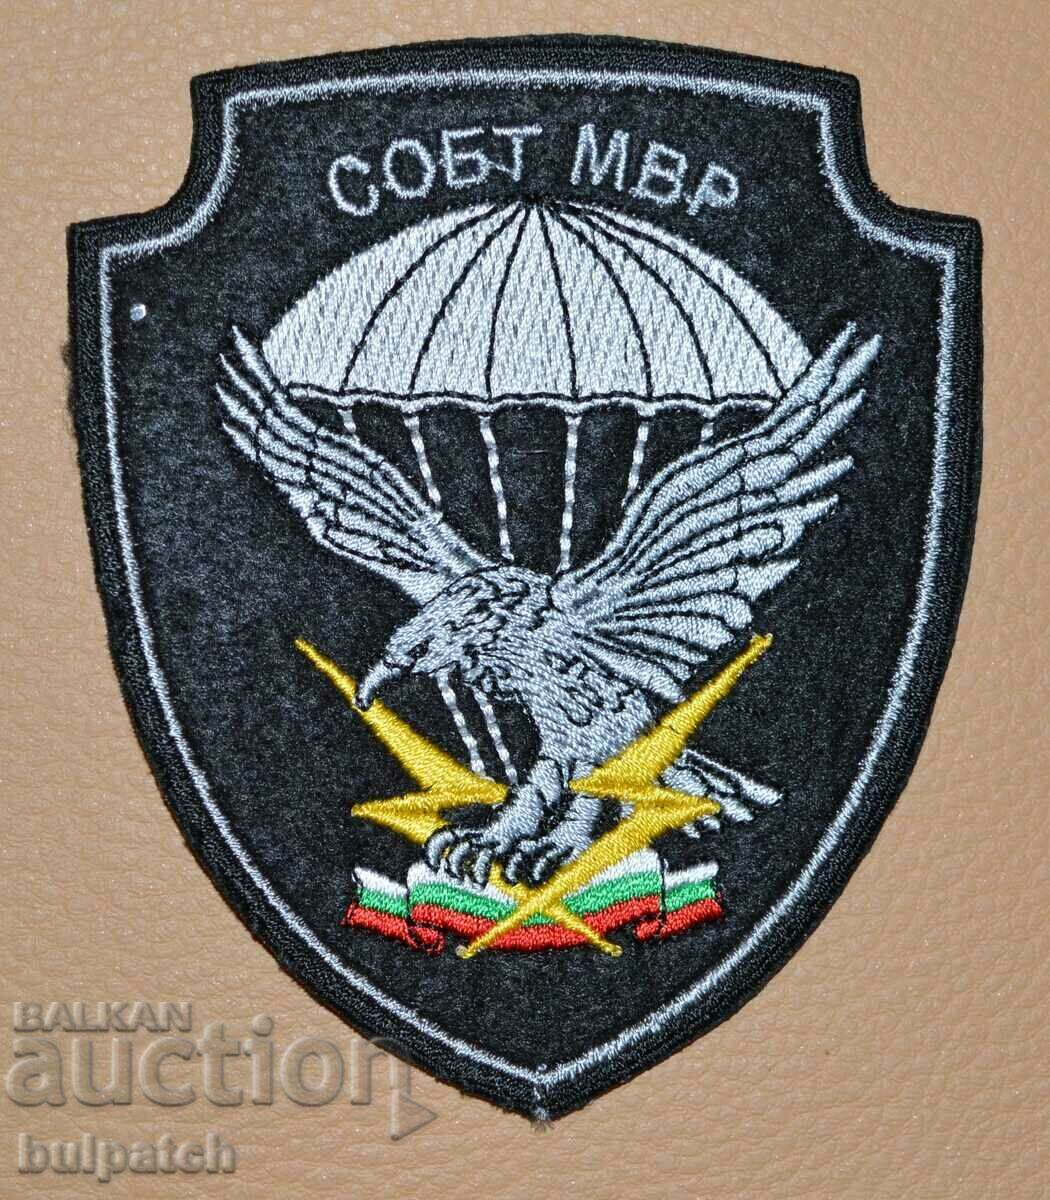 Parachute emblem of SOBT MIA